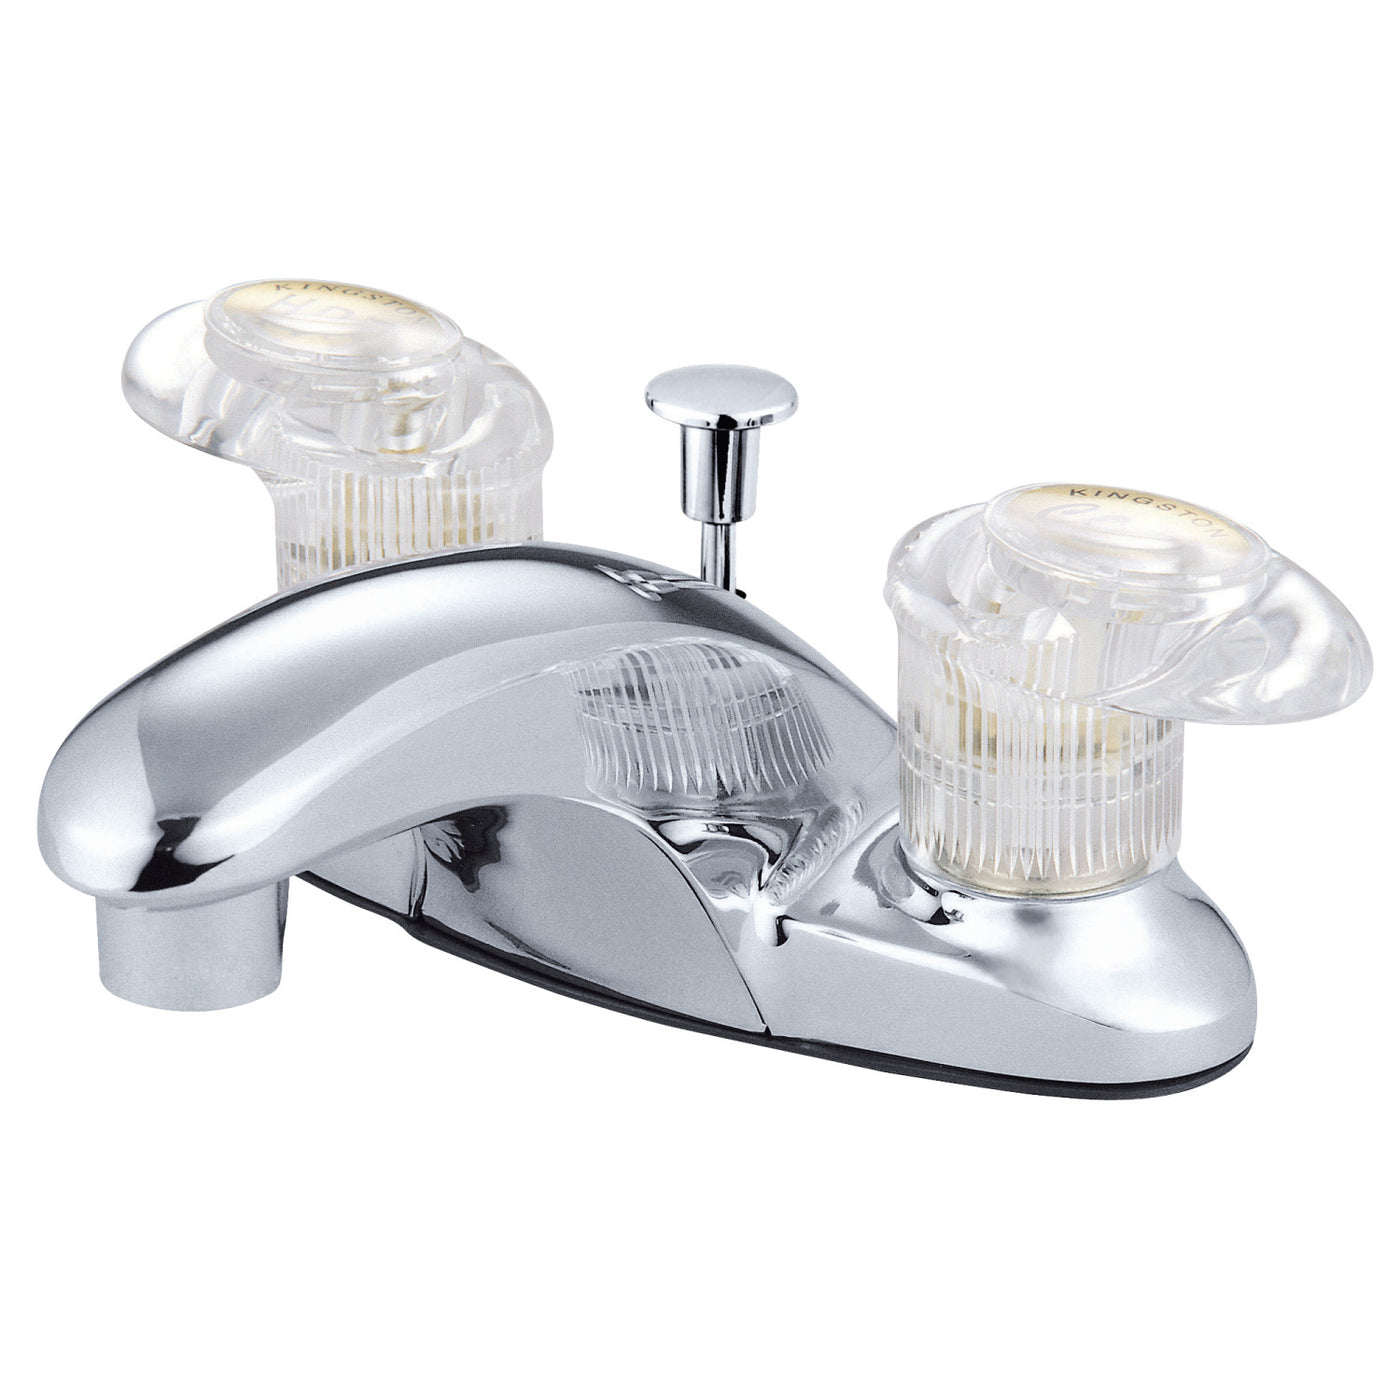 Elements of Design EB6151 4-Inch Centerset Bathroom Faucet, Polished Chrome